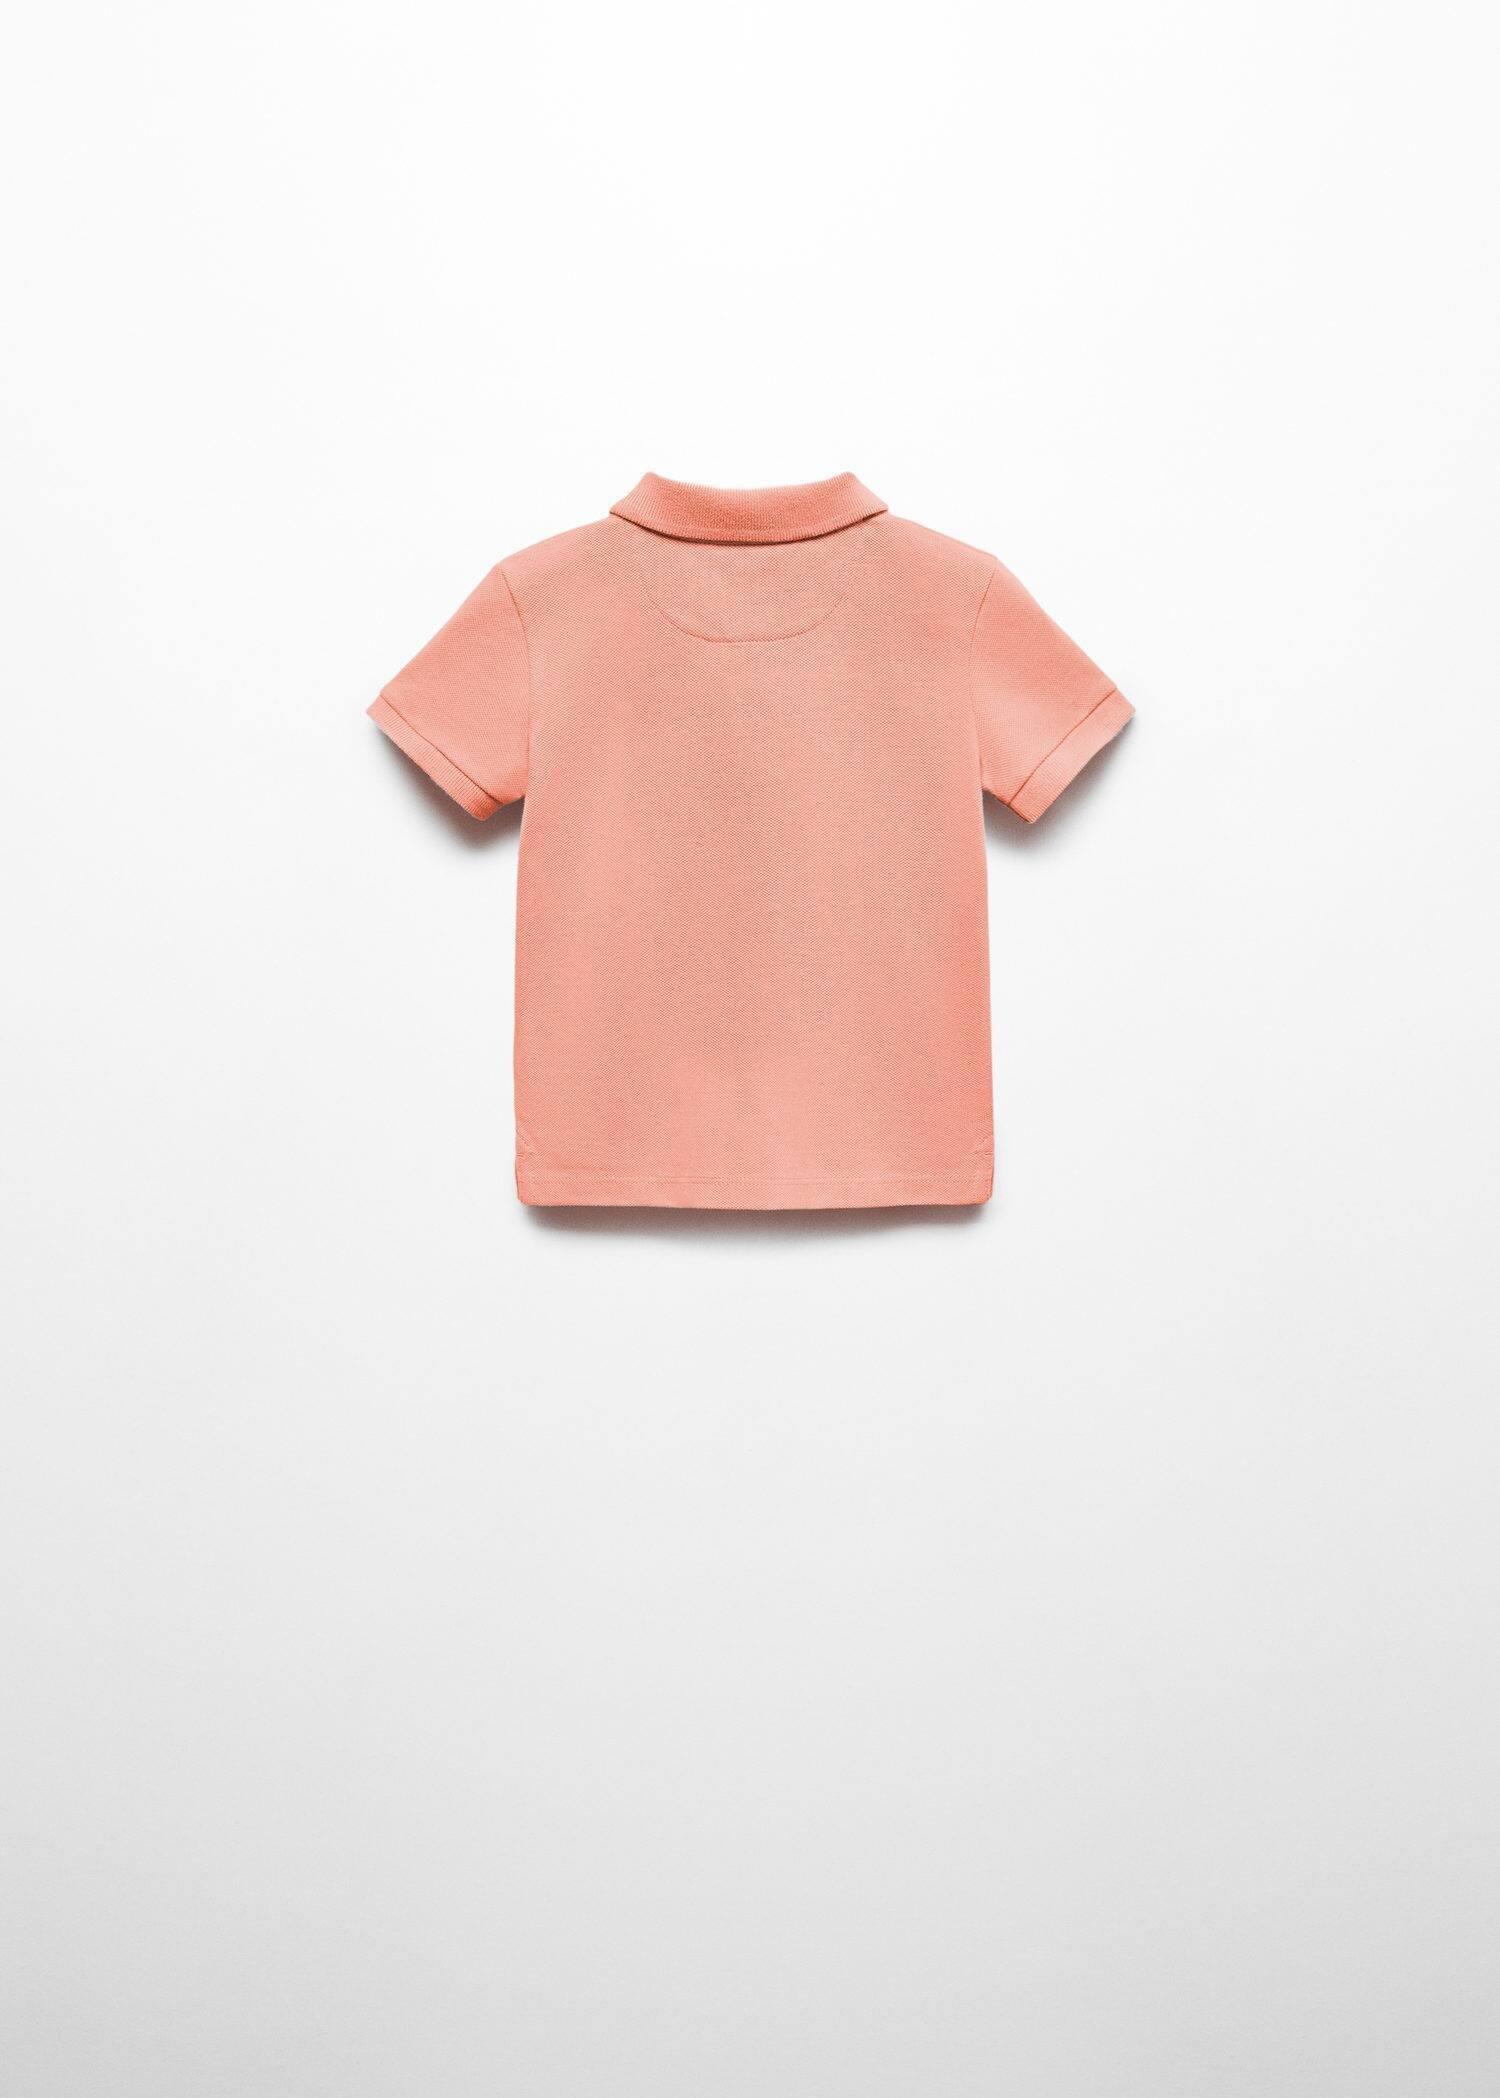 Mango - Red  Cotton Polo Shirt, Kids Boys